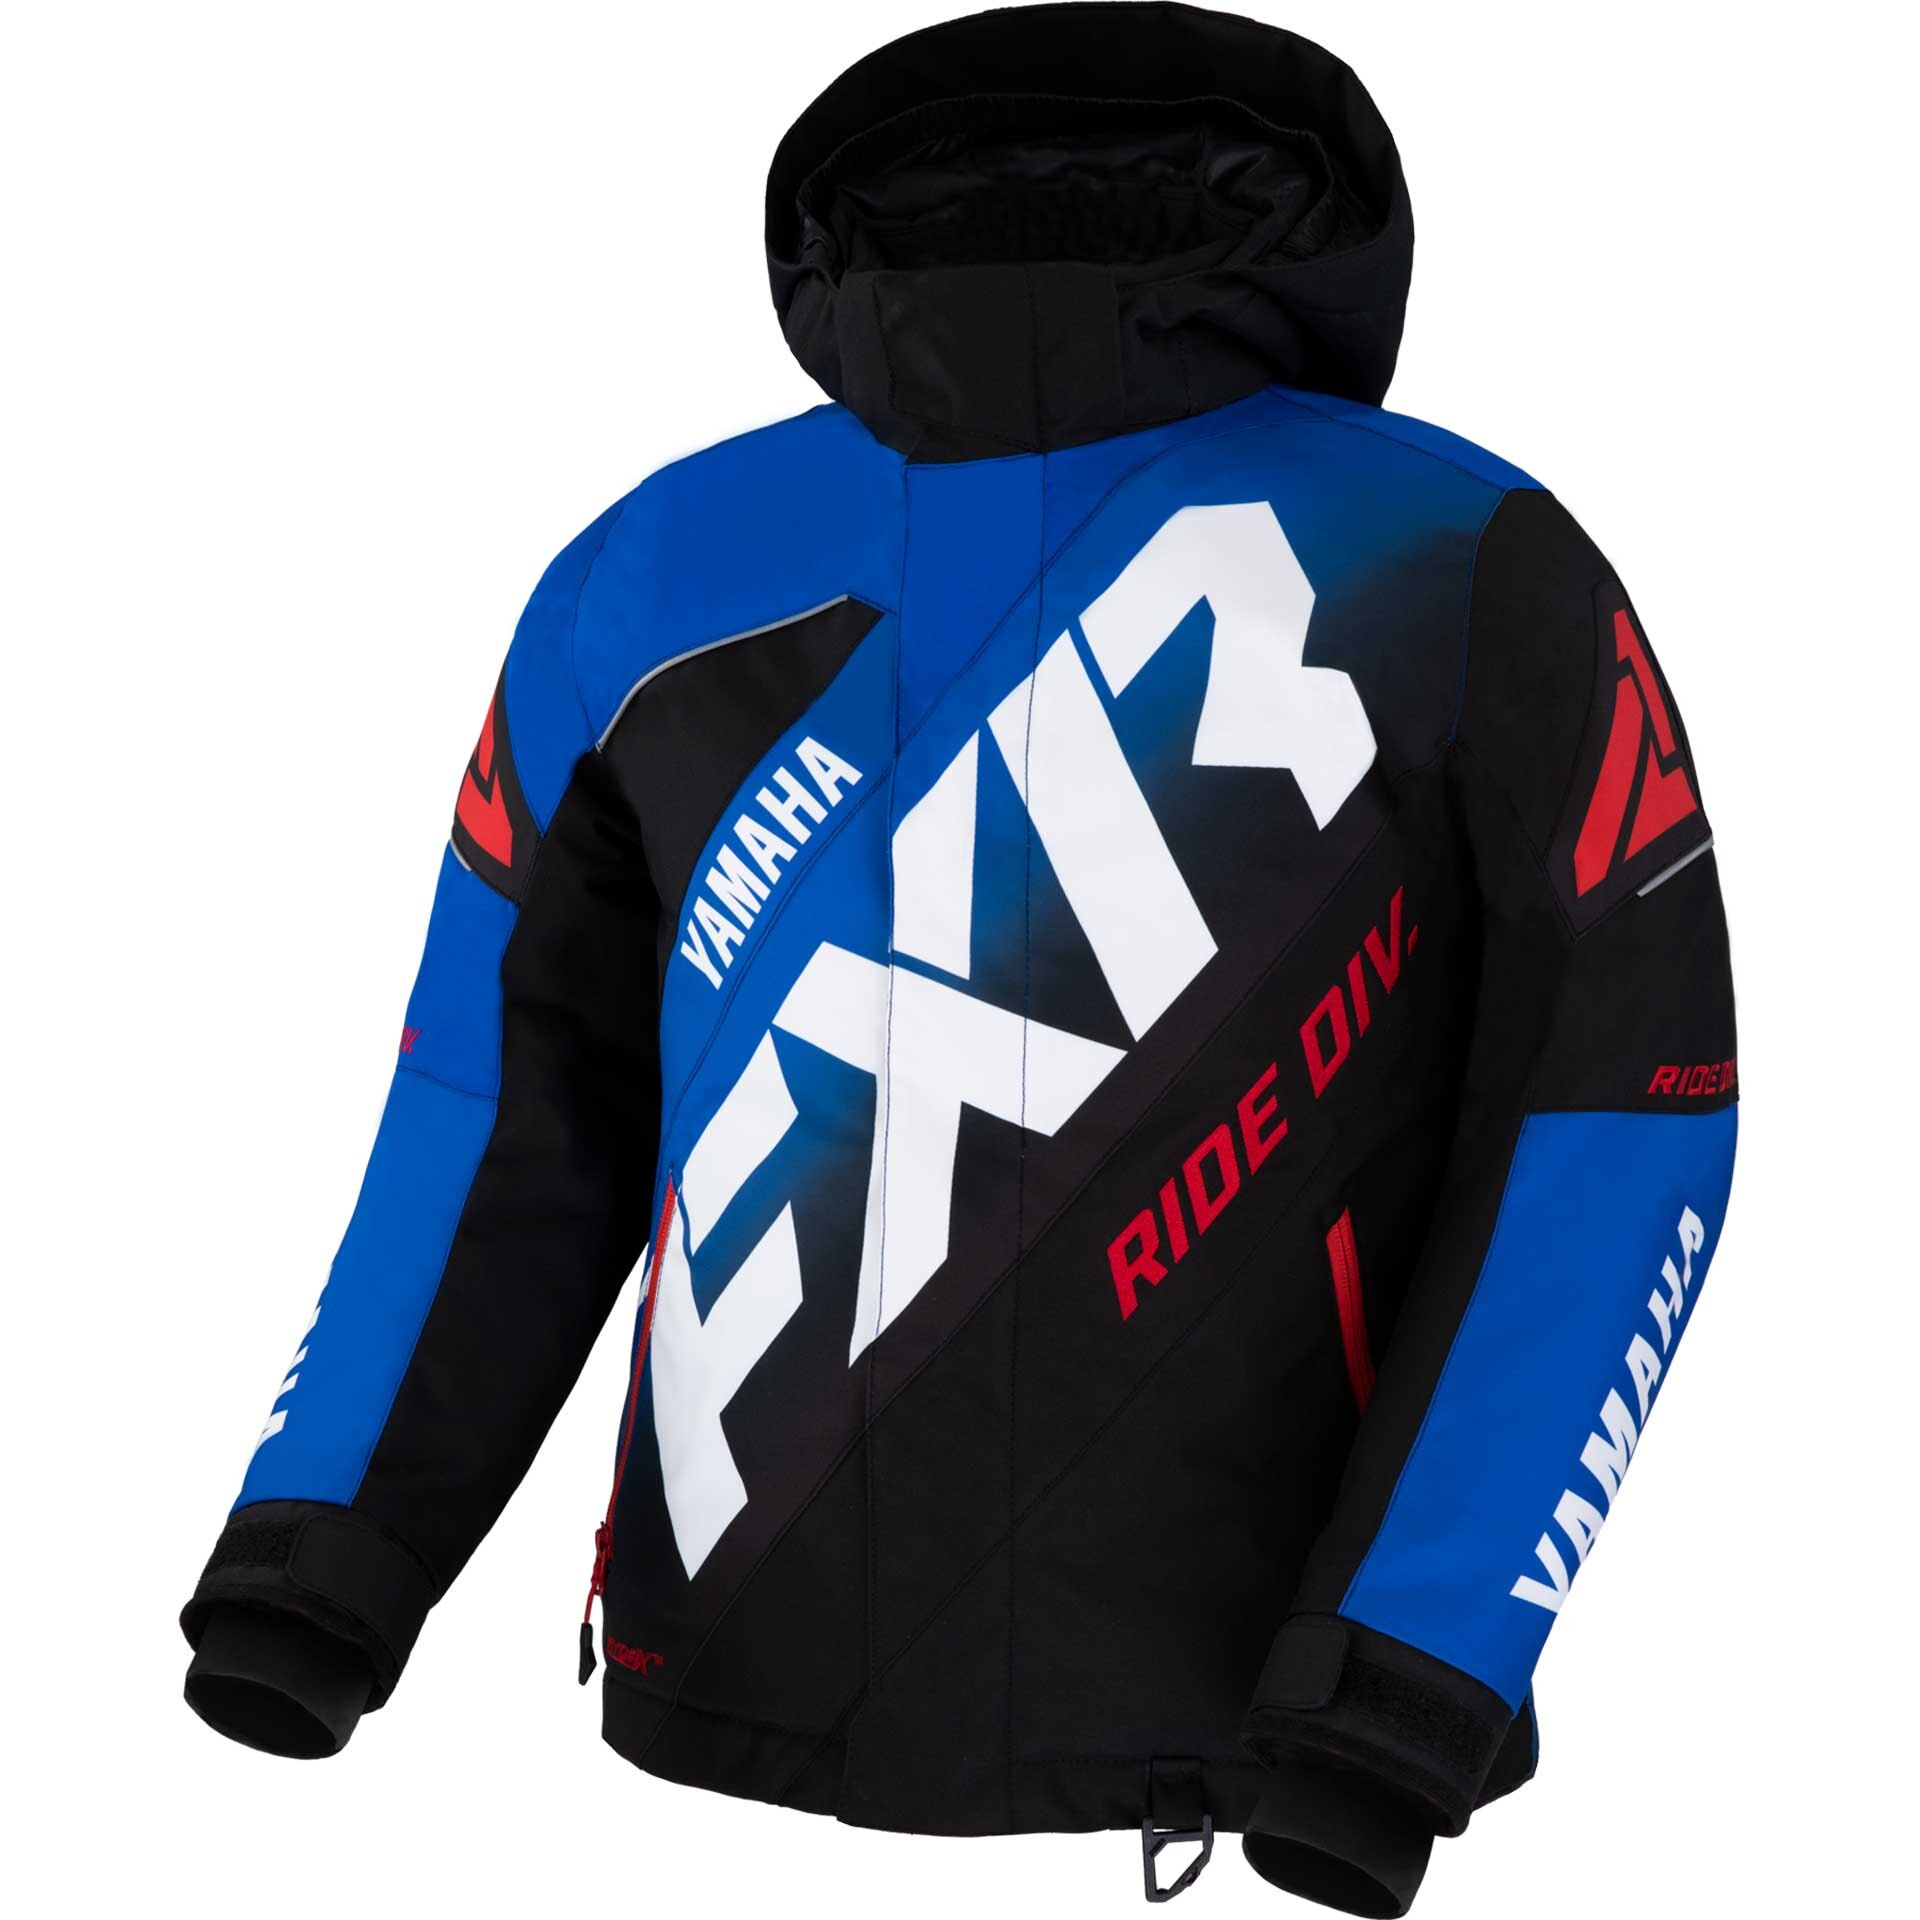 Children's Yamaha CX Jacket by FXR® Size 6/7 blue/red/white